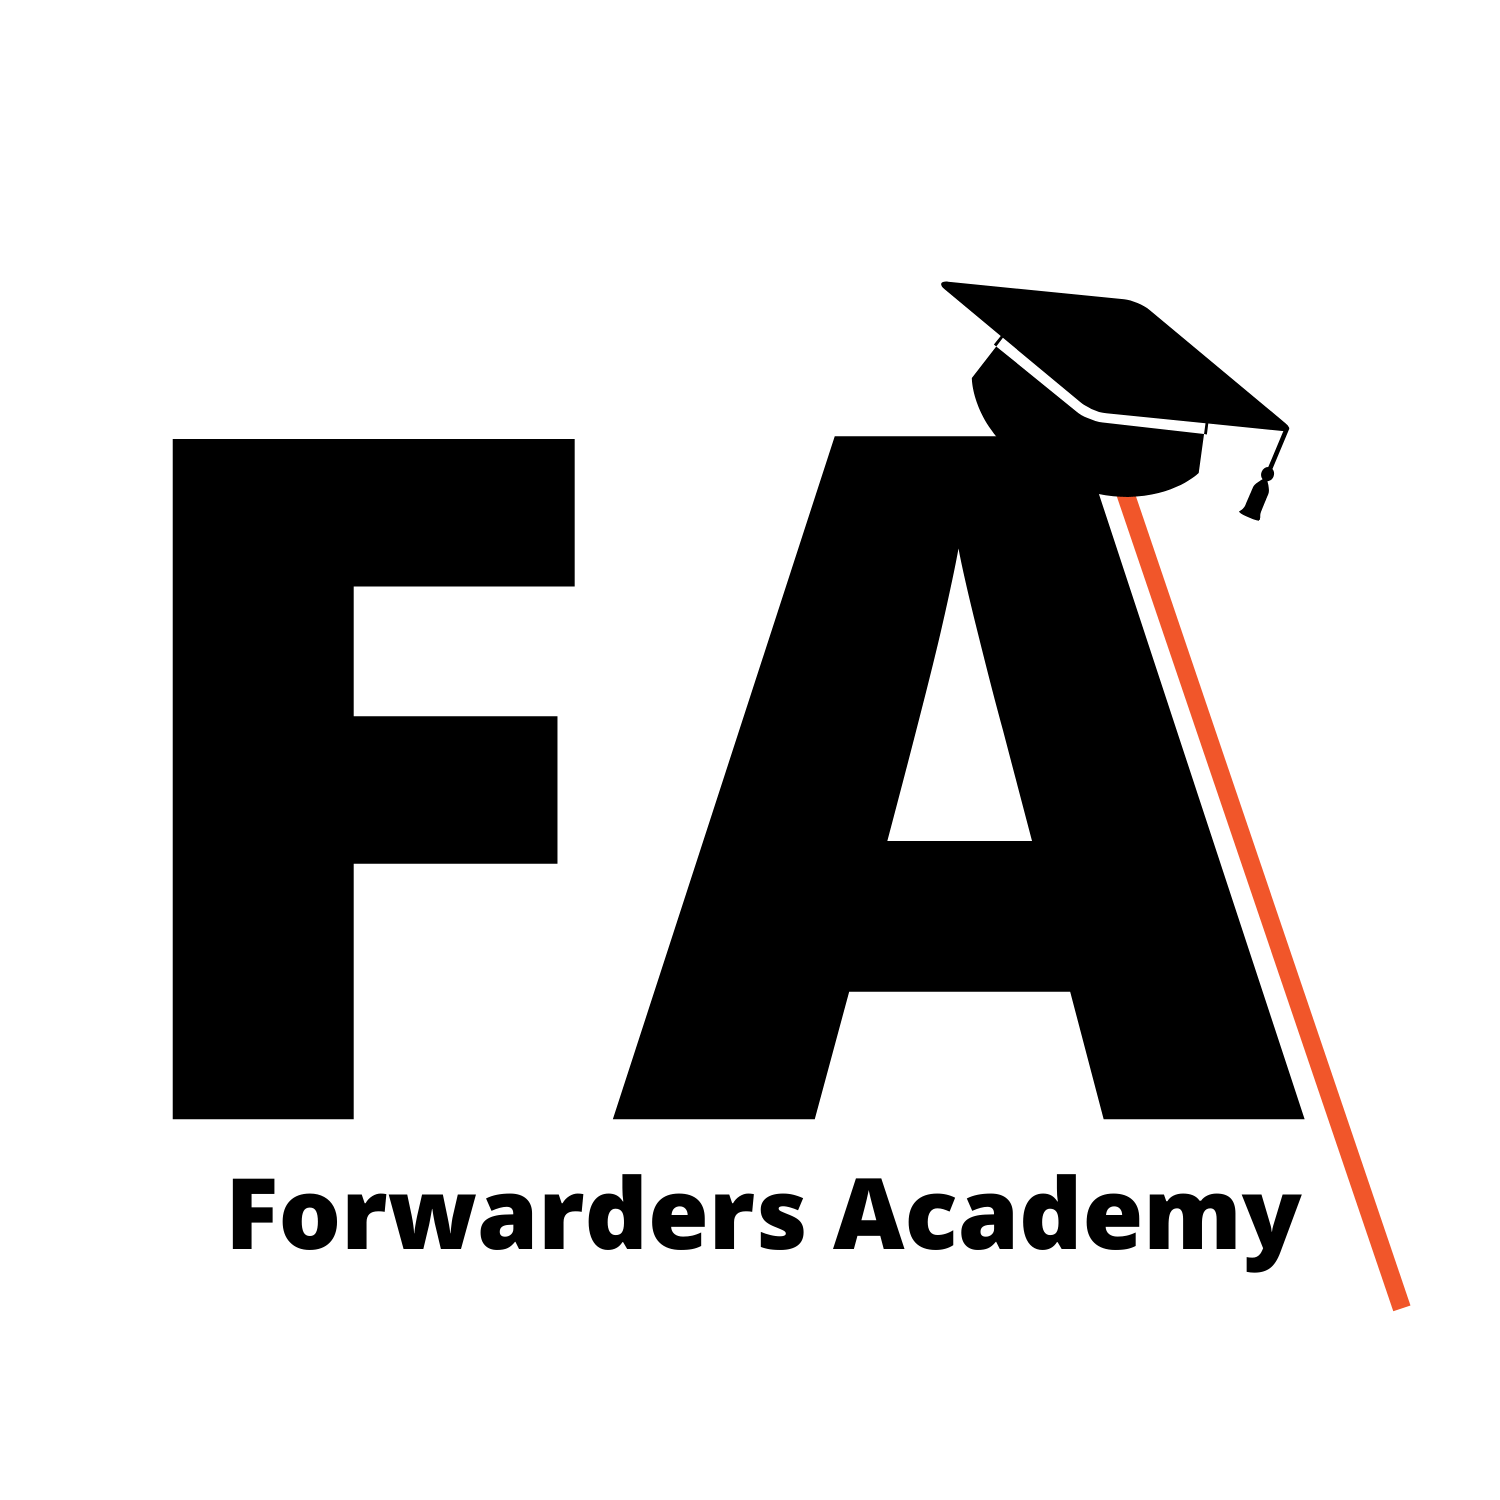 Forwarders Academy